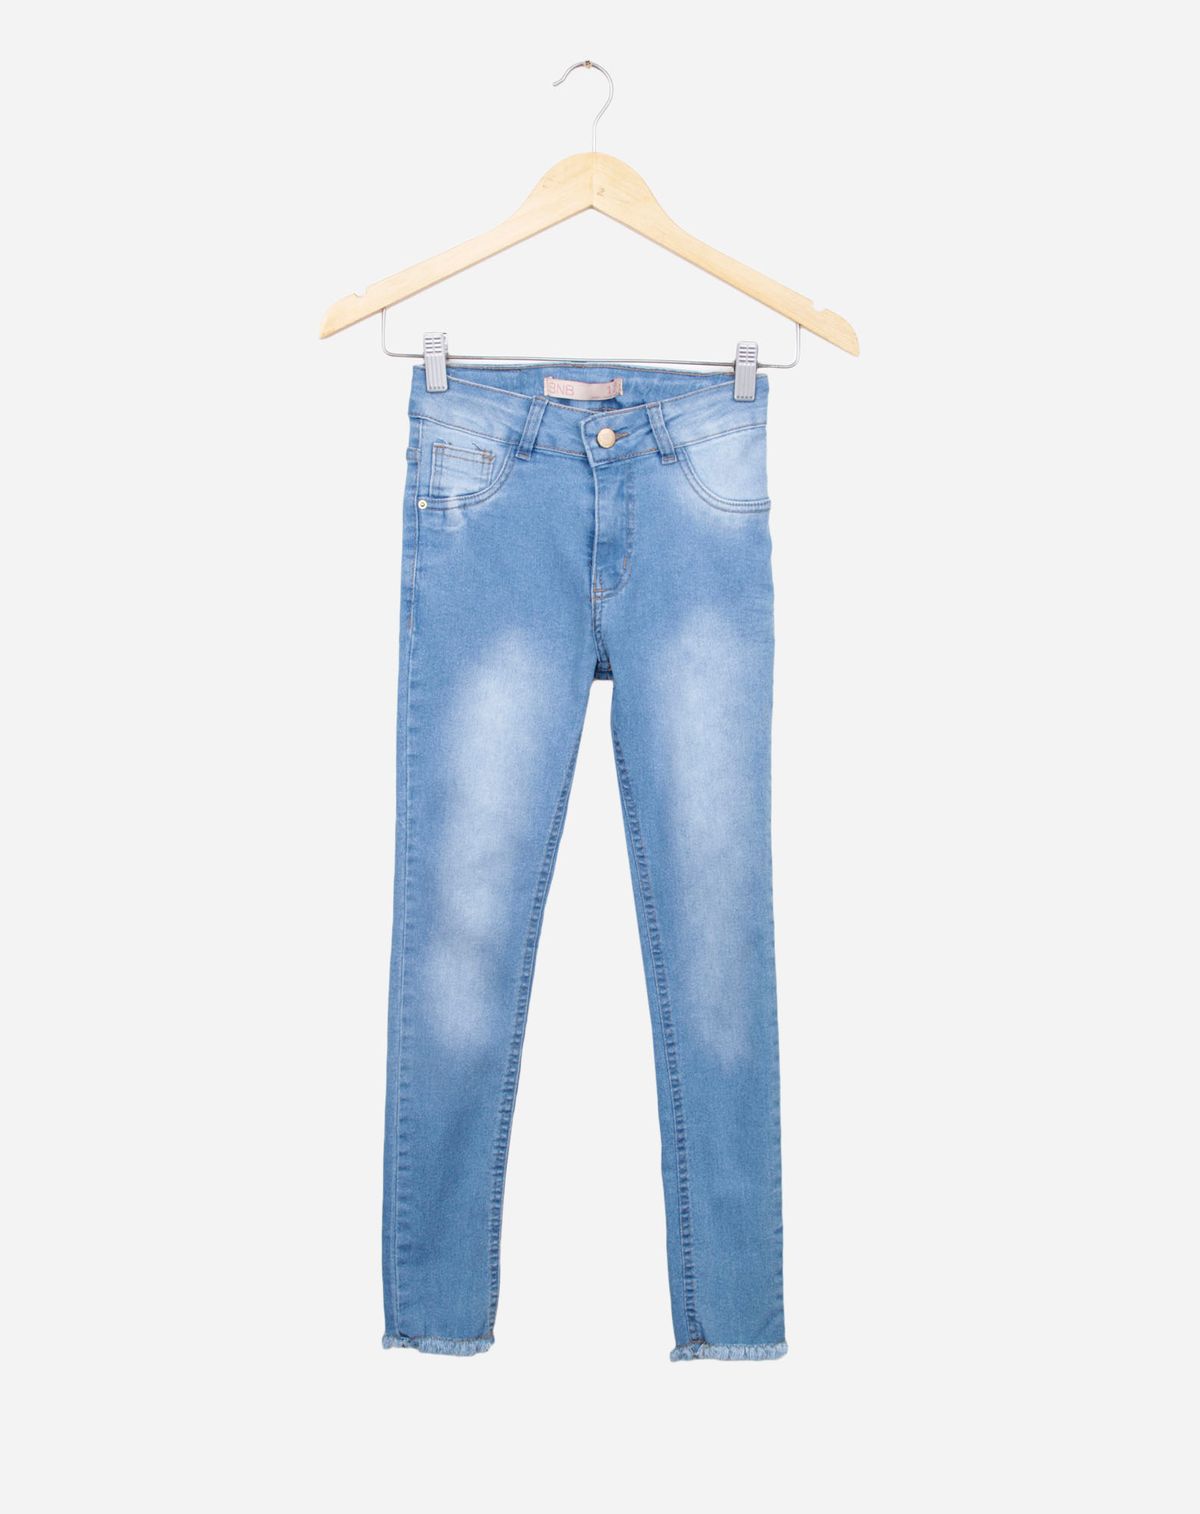 679462003-calca-jeans-juvenil-menino-skinny-lojas-besni-jeans-claro-14-f91